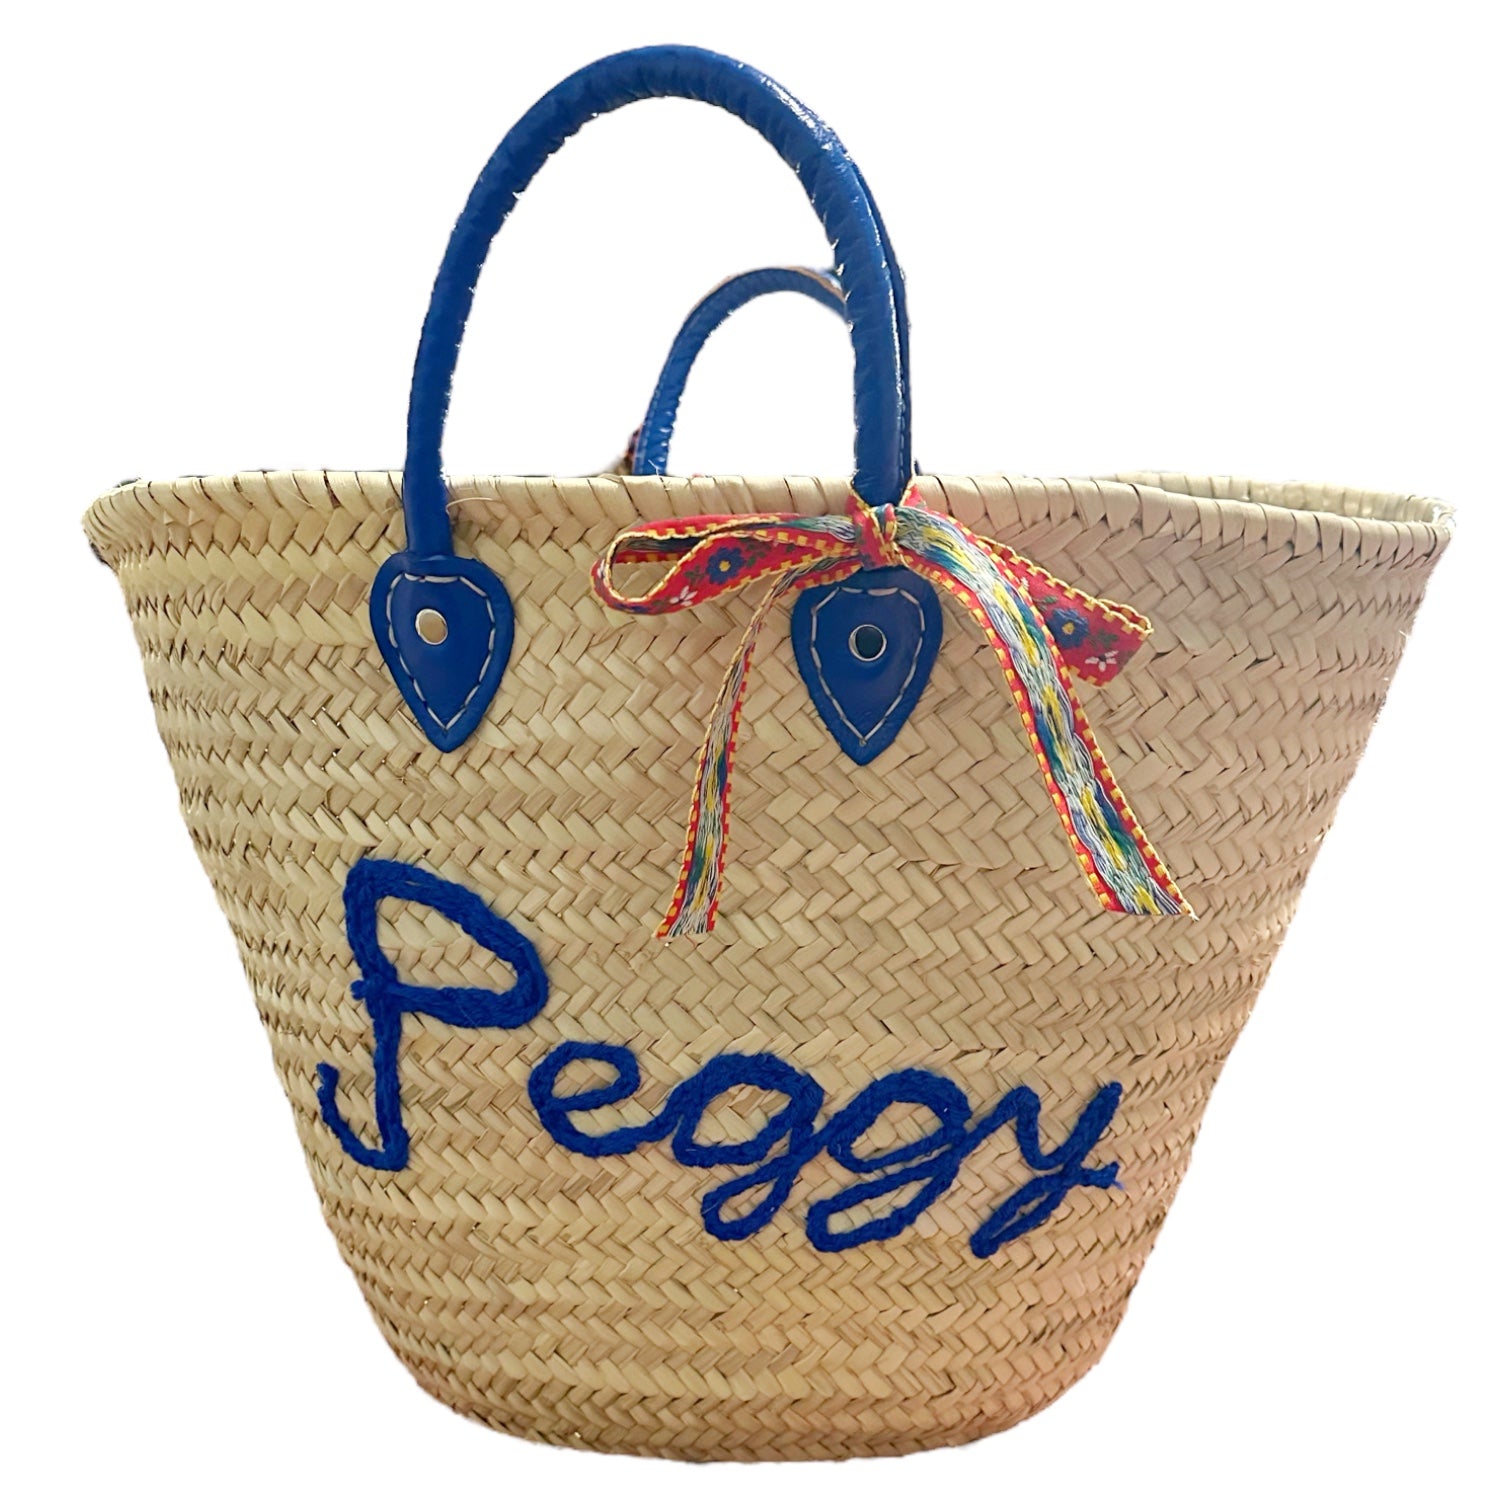 Big Embroidered Bag / Basket / French Market Basket / Straw Basket - blue - Premium  from Tricia Lowenfield Design 